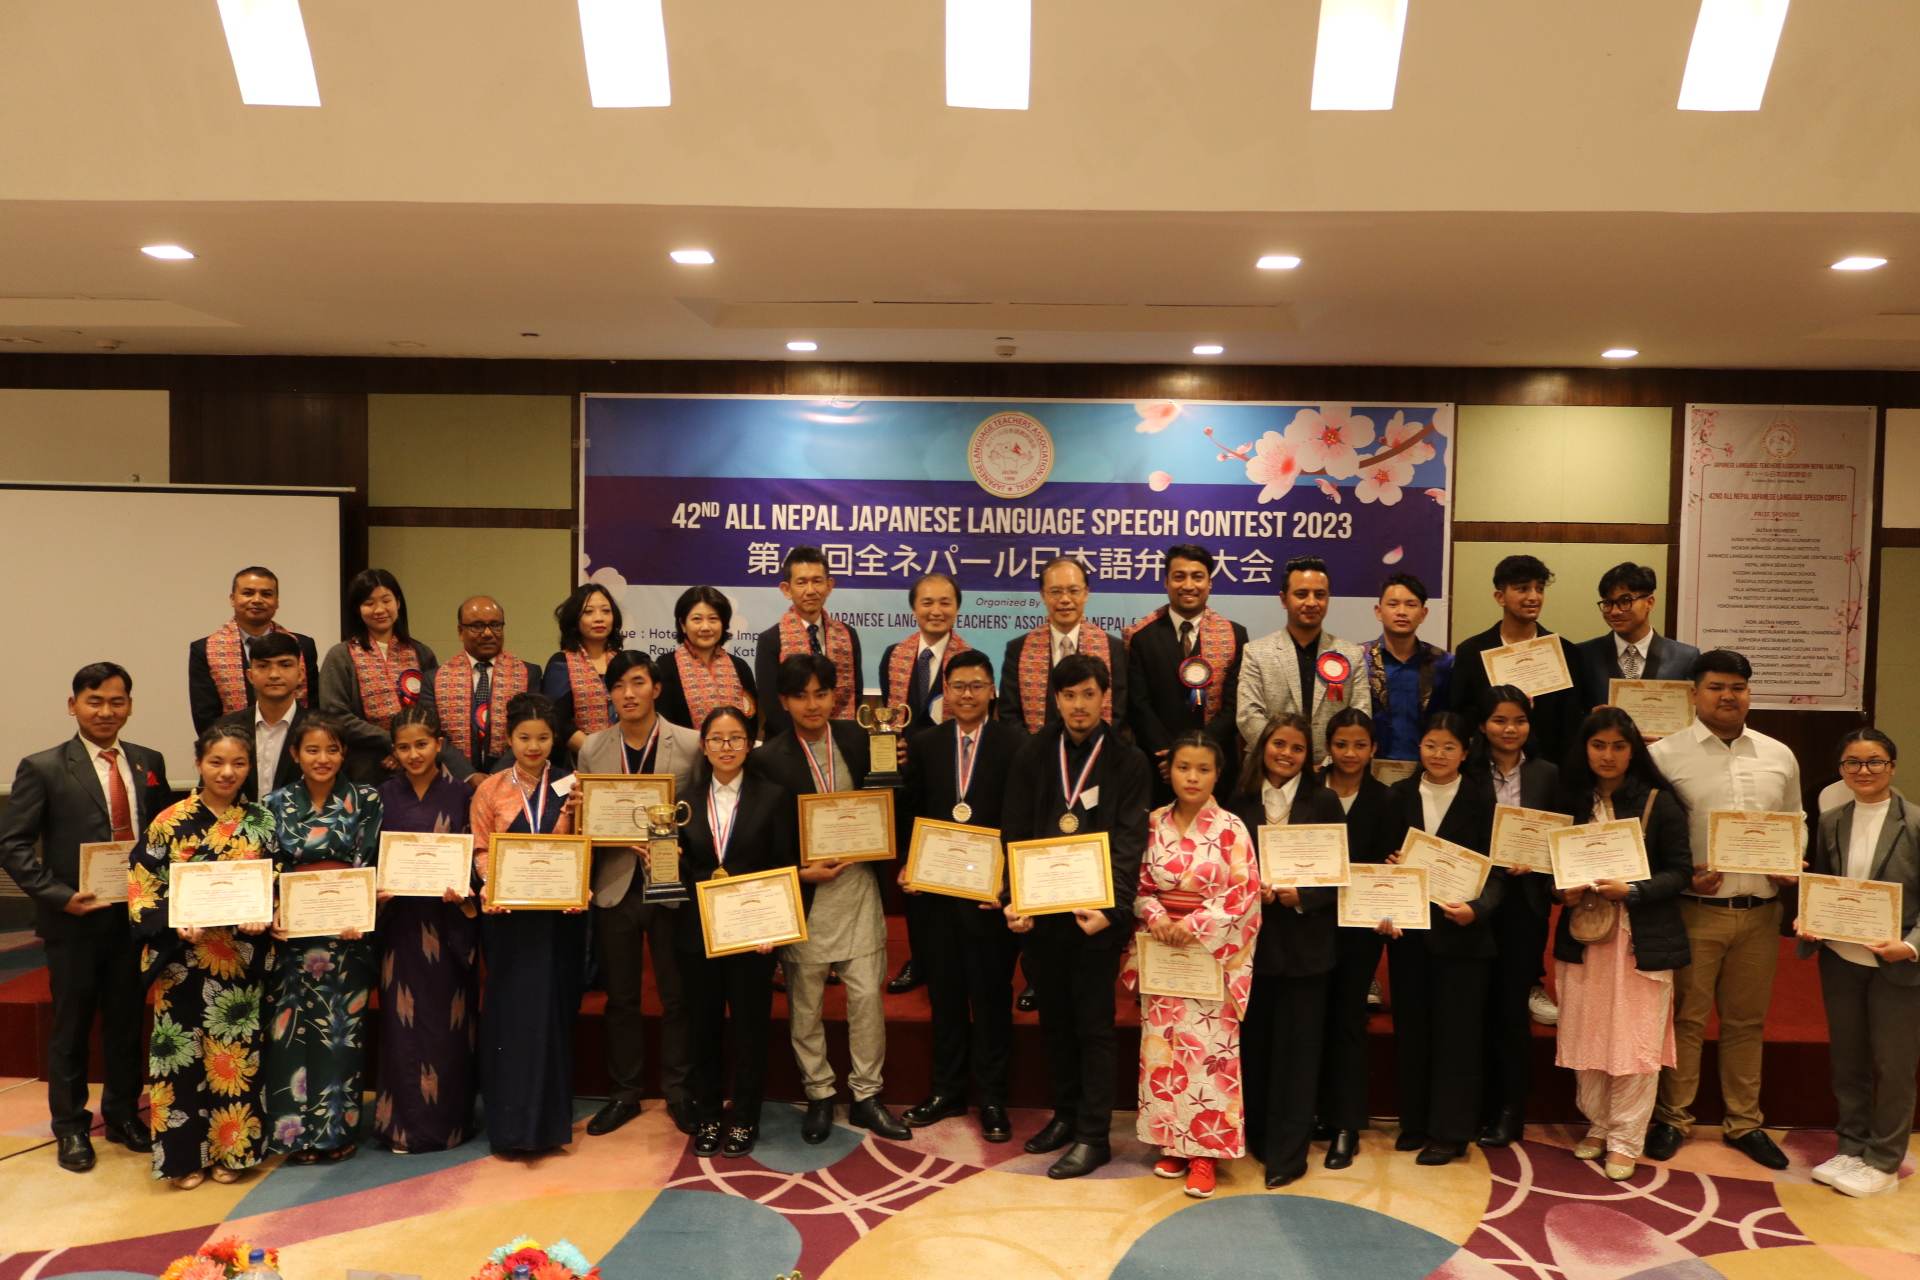 42nd All Nepal Japanese Language Speech Contest